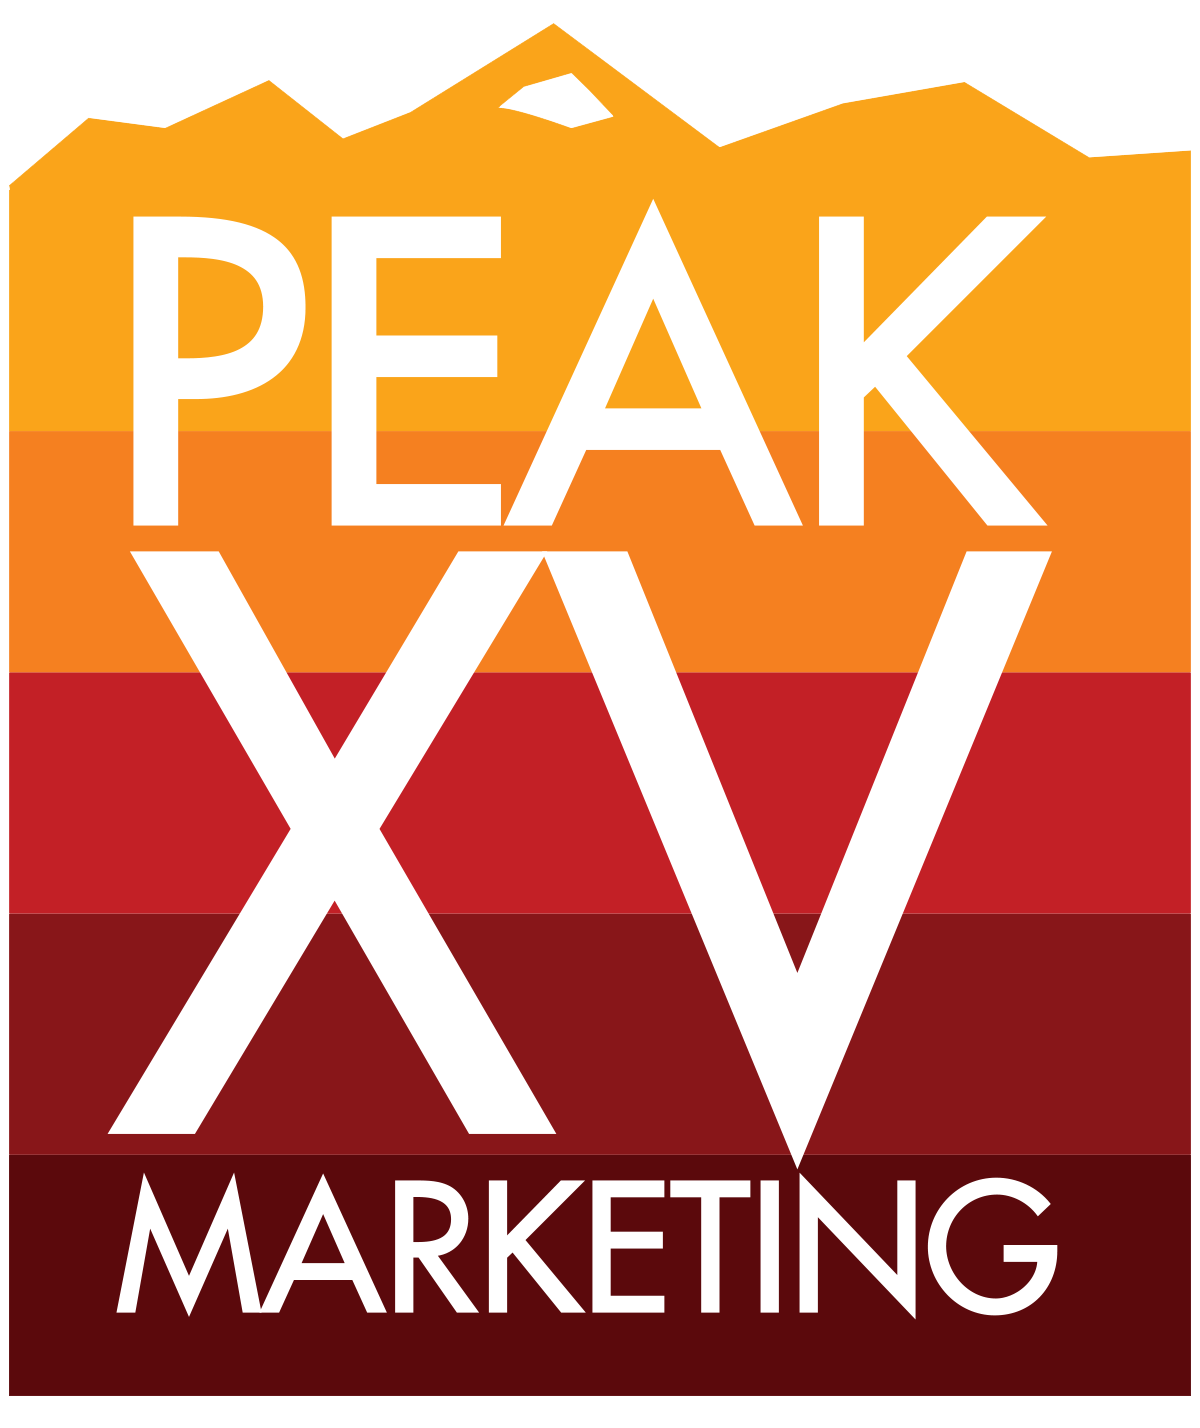 Peak XV Marketing | Digitally Own Your Neighborhood